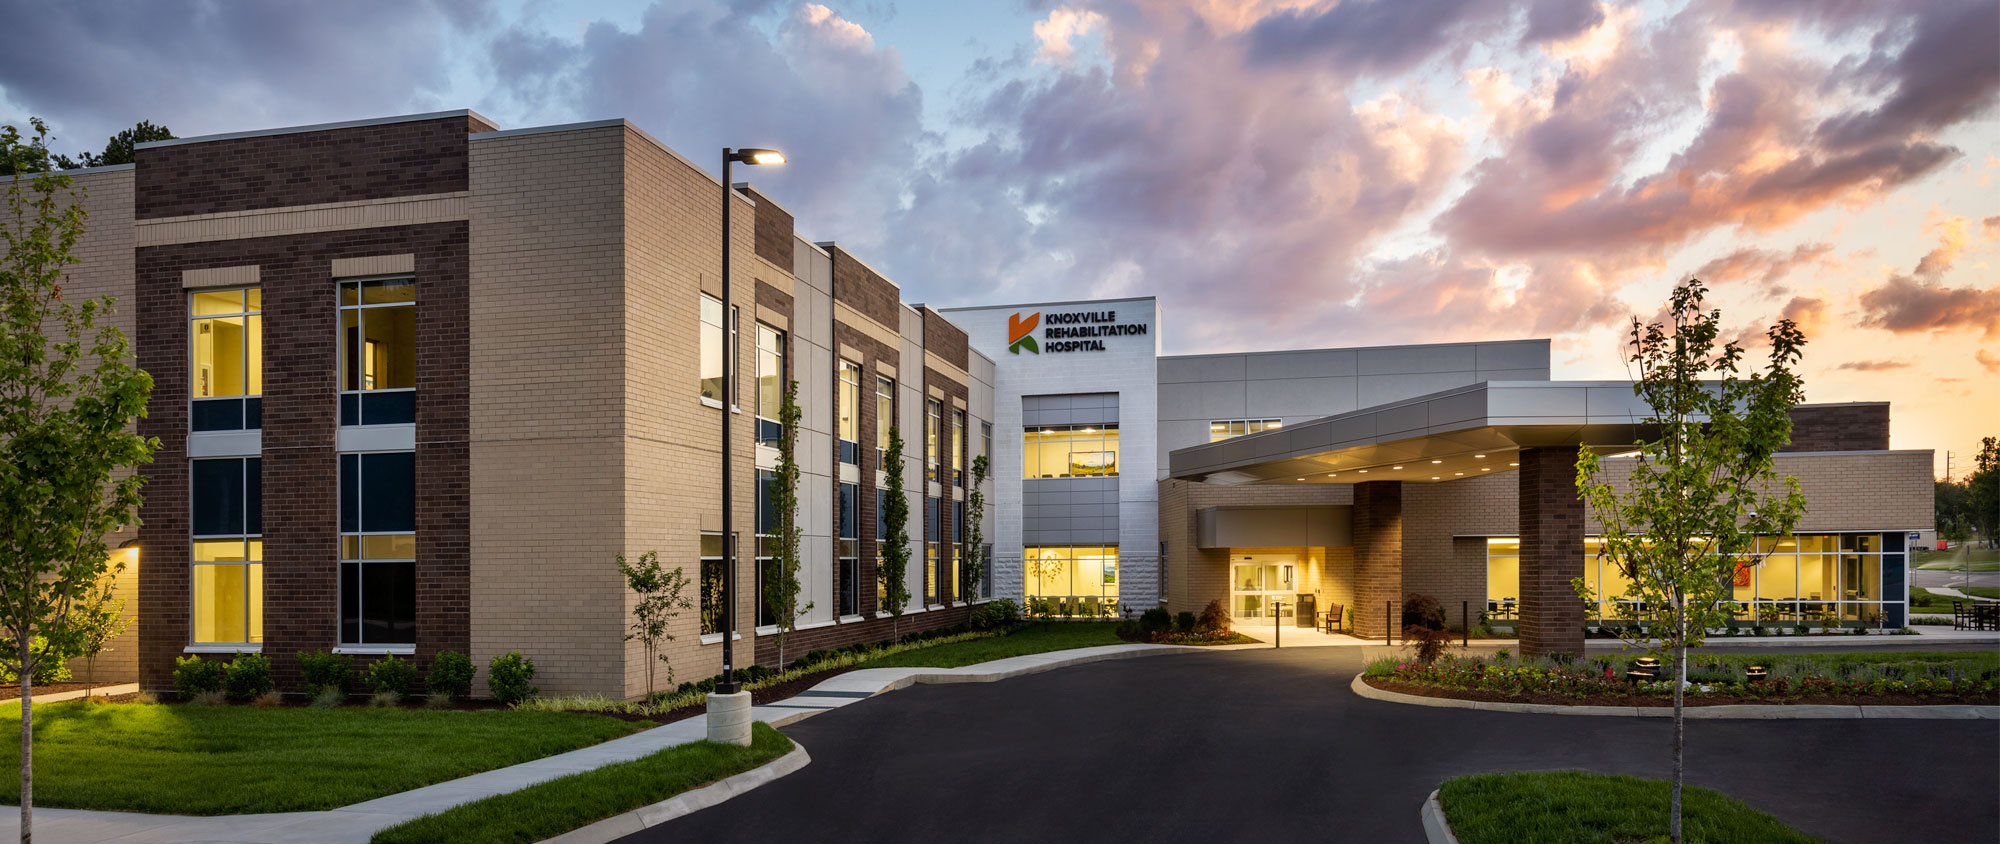 Kindred Healthcare – Knoxville Rehabilitation Hospital